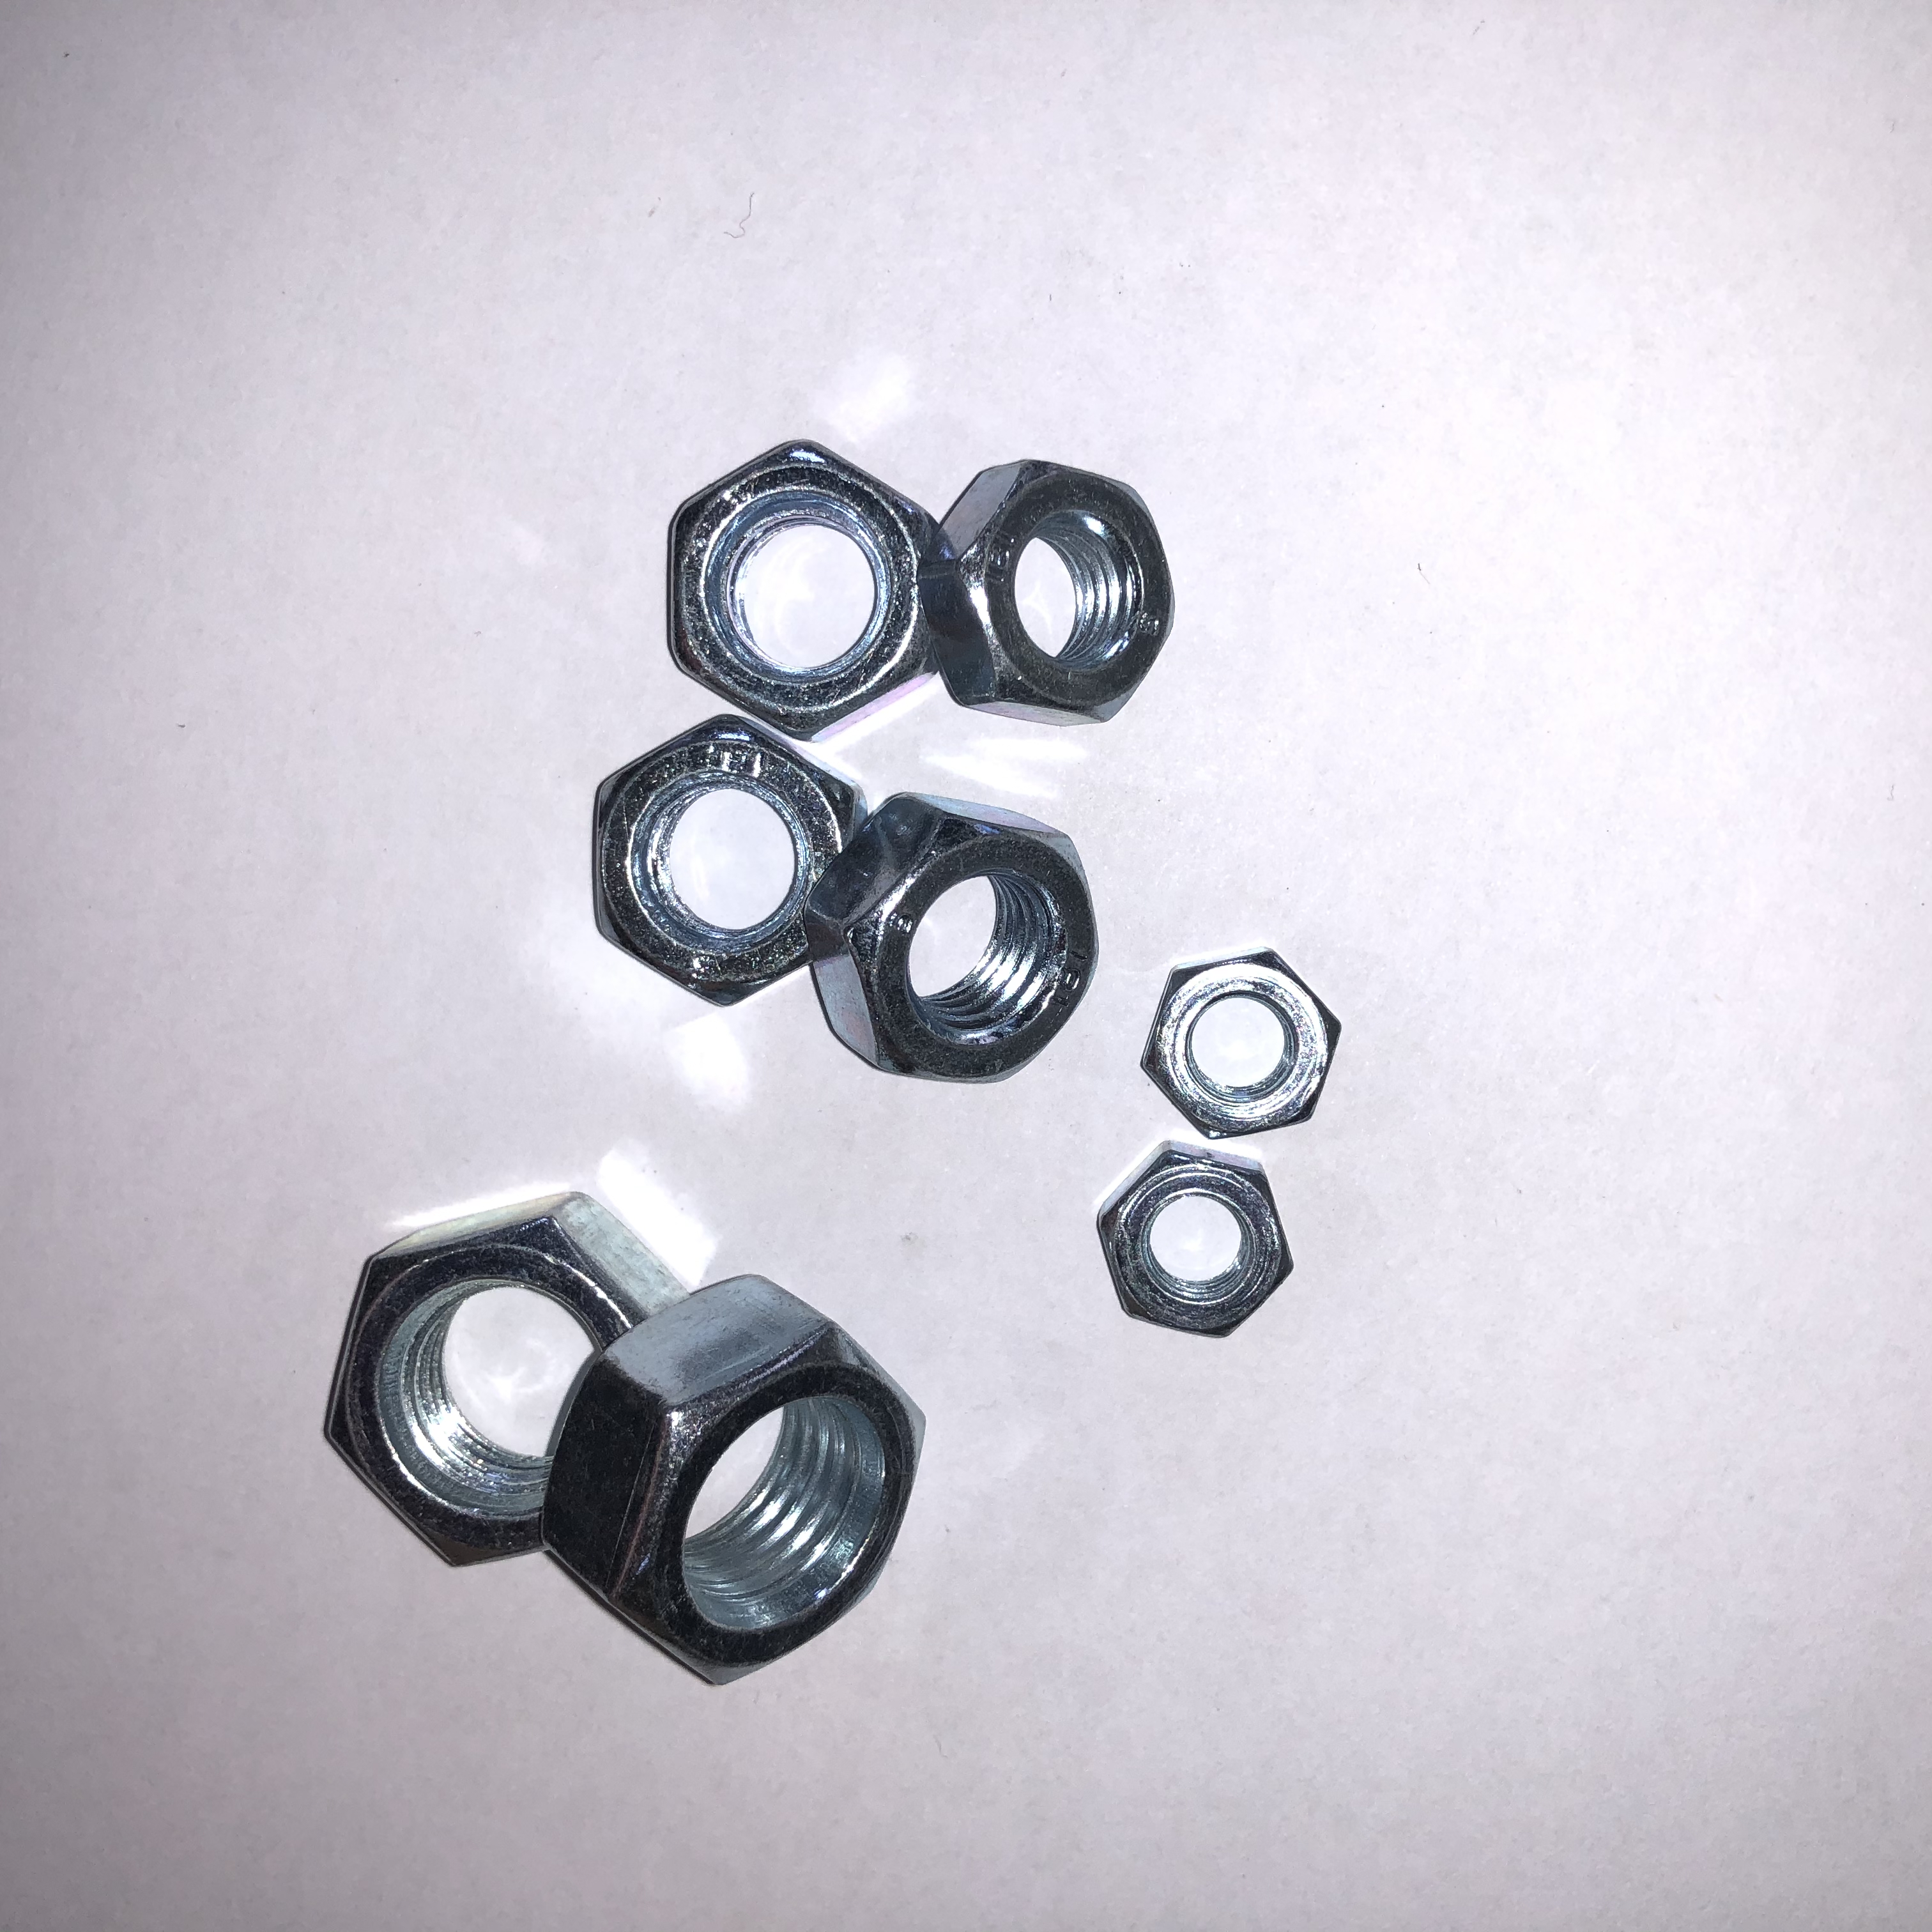 I-DIN934 HEX NUT Ipuleti le-Zinc le-carbon steel nut ne-bolt grade 4.8 6.8 8.8 10.9 12.9